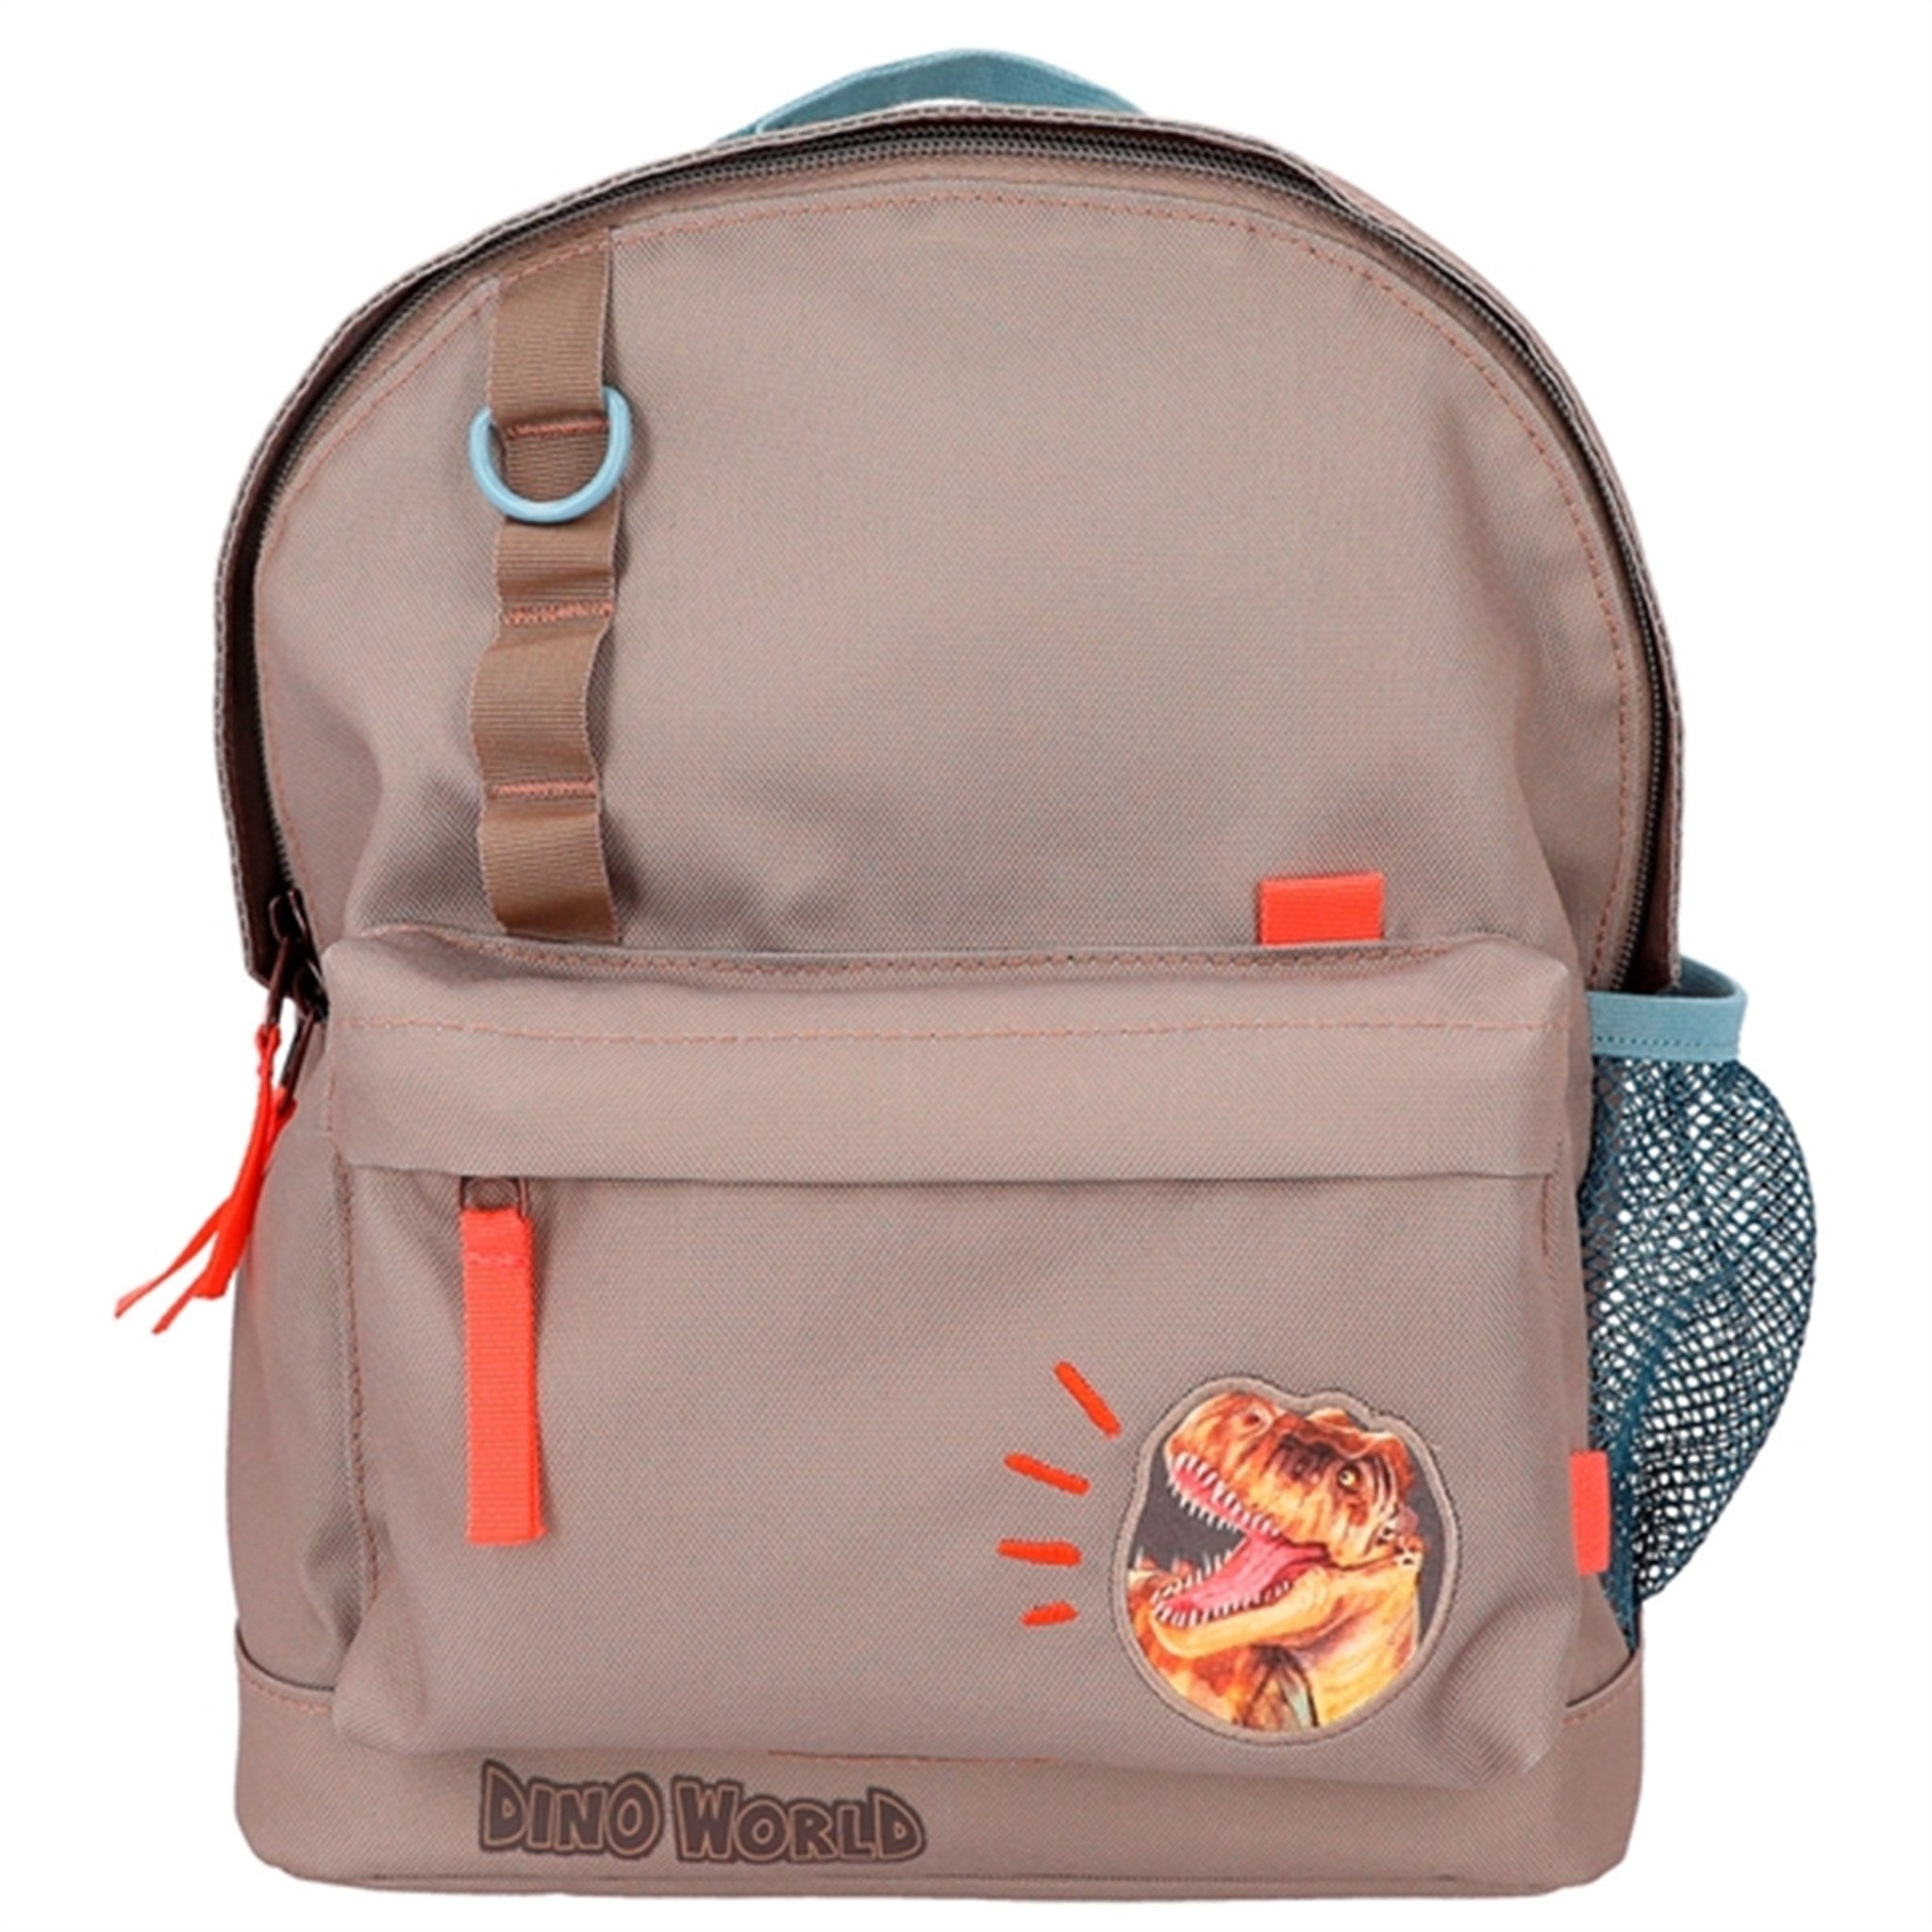 Dino World Backpack Khaki Brown